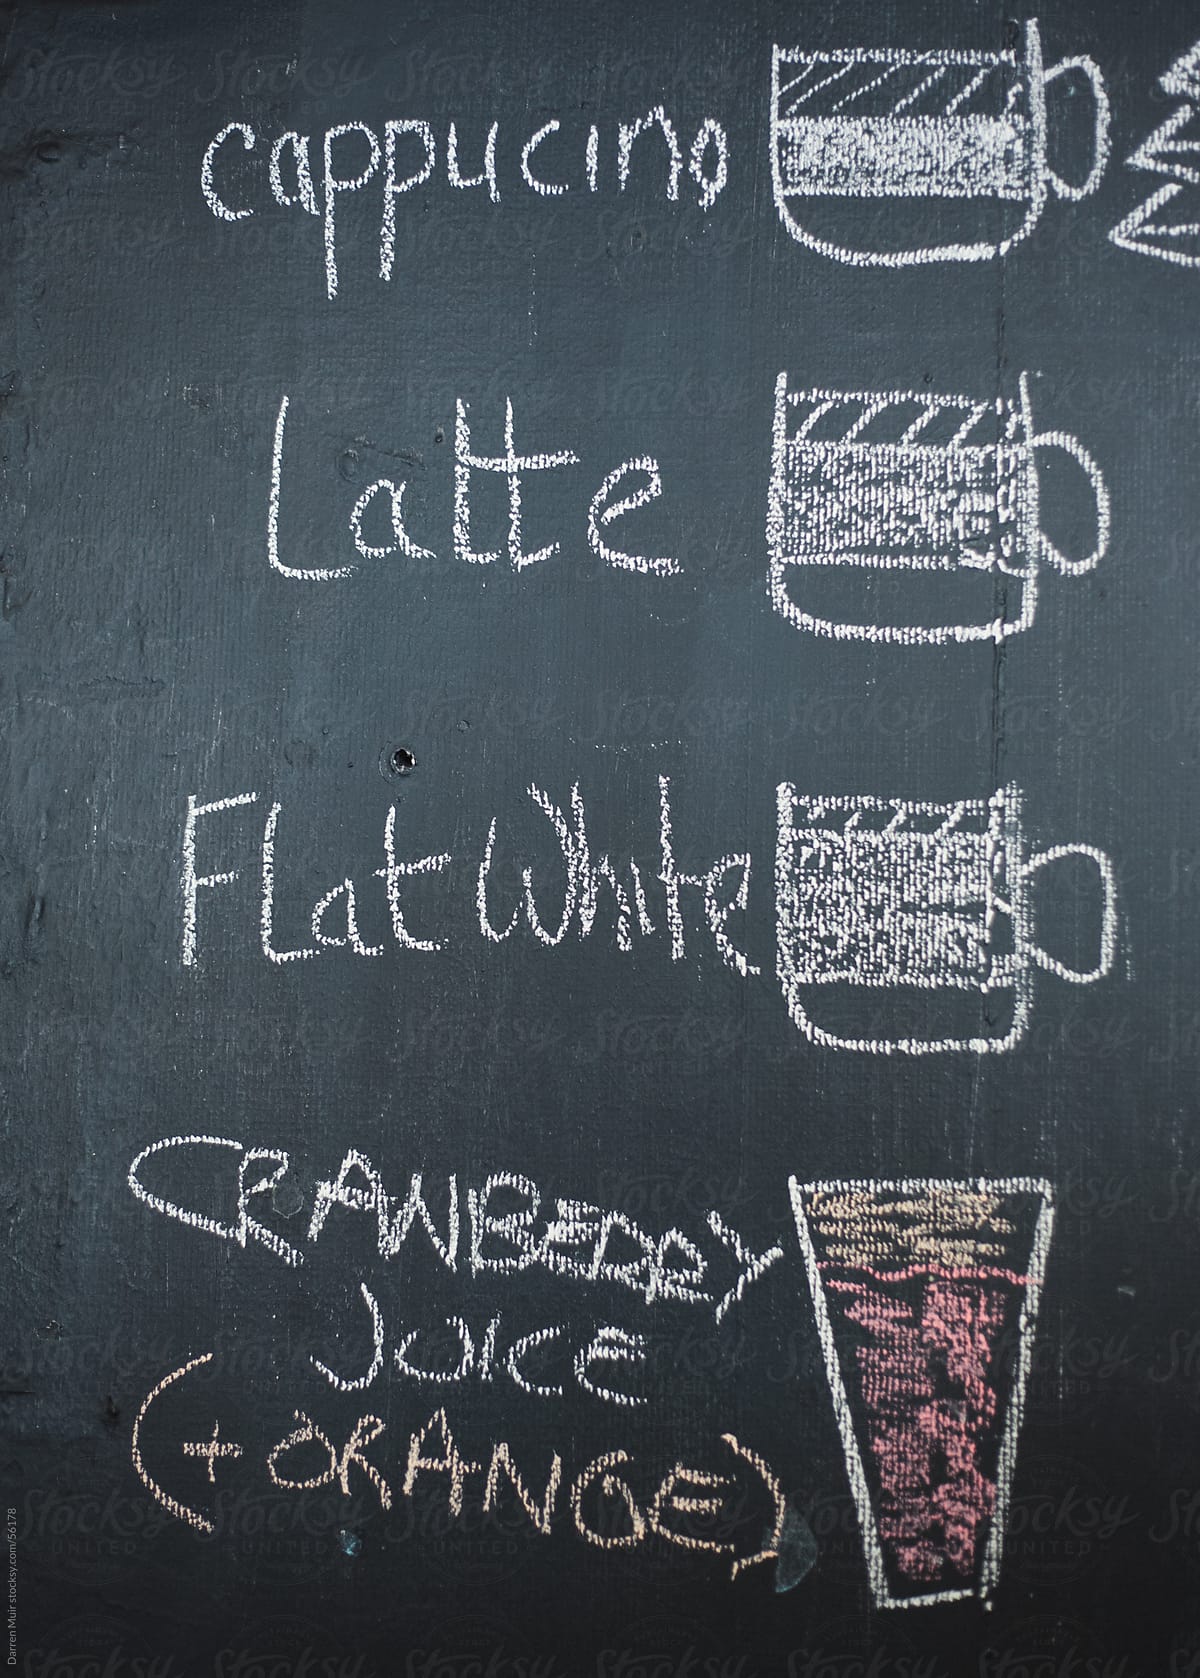 Chalkboard advertising drinks.